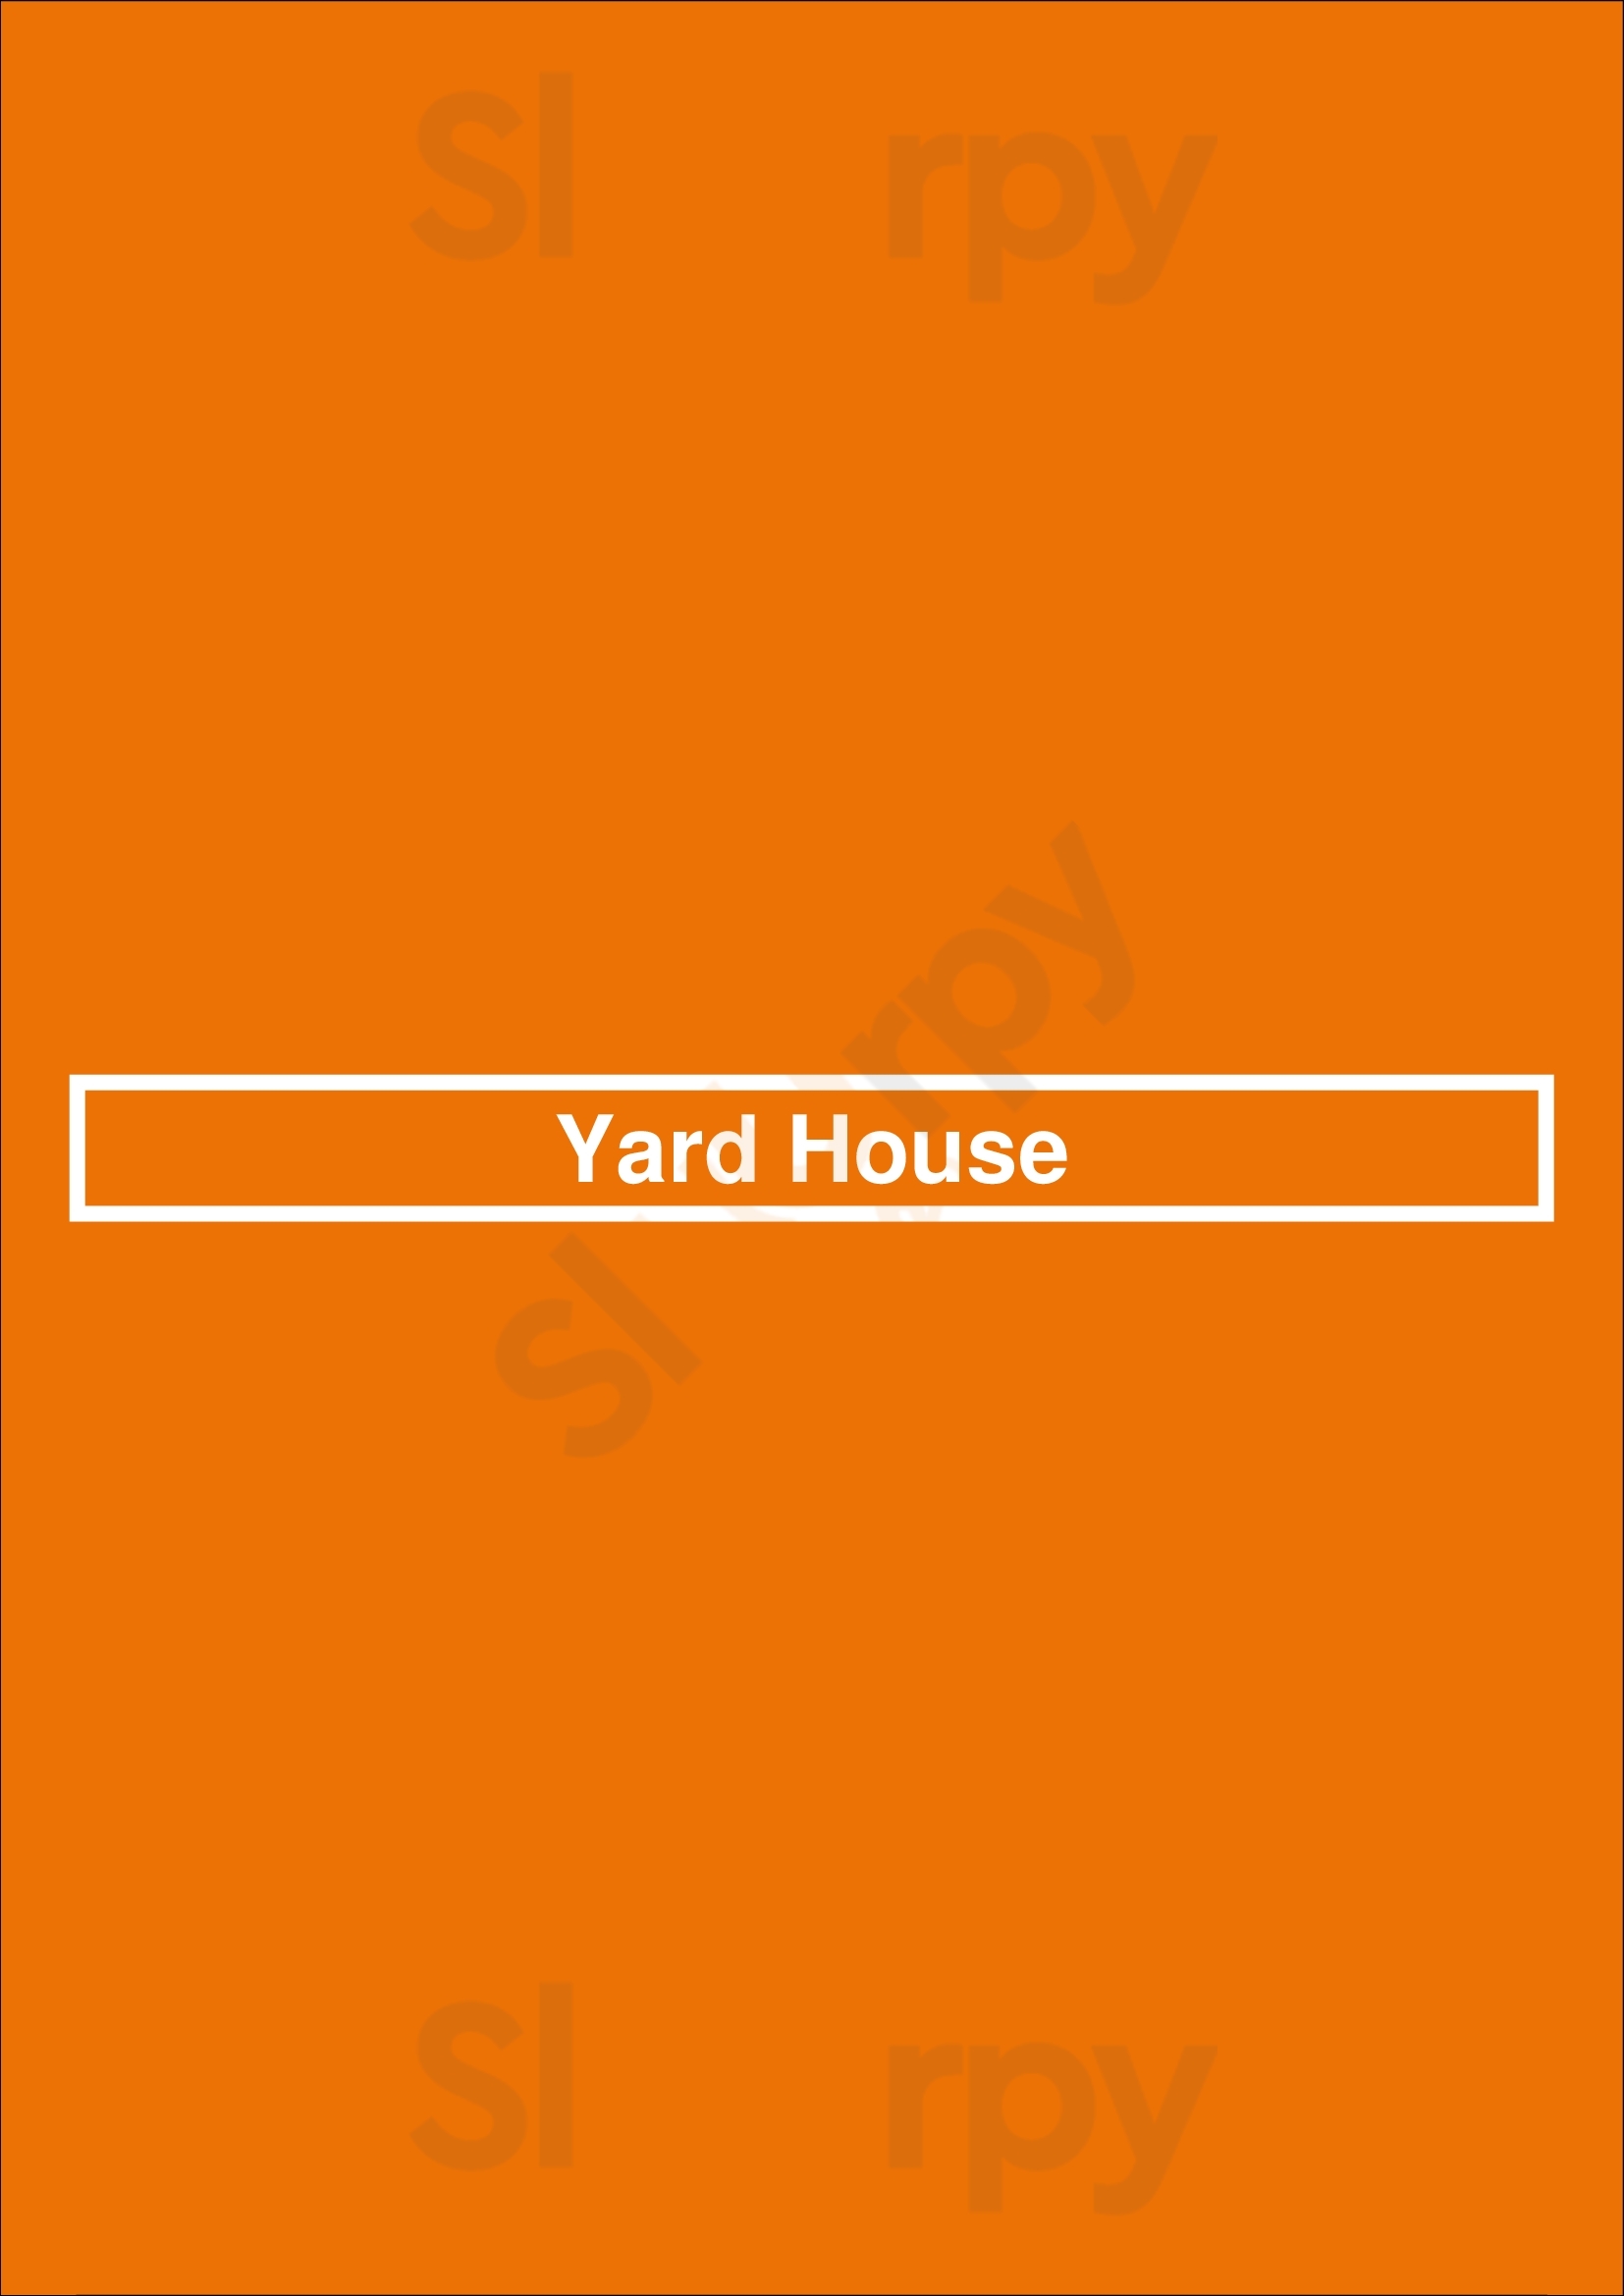 Yard House Portland Menu - 1